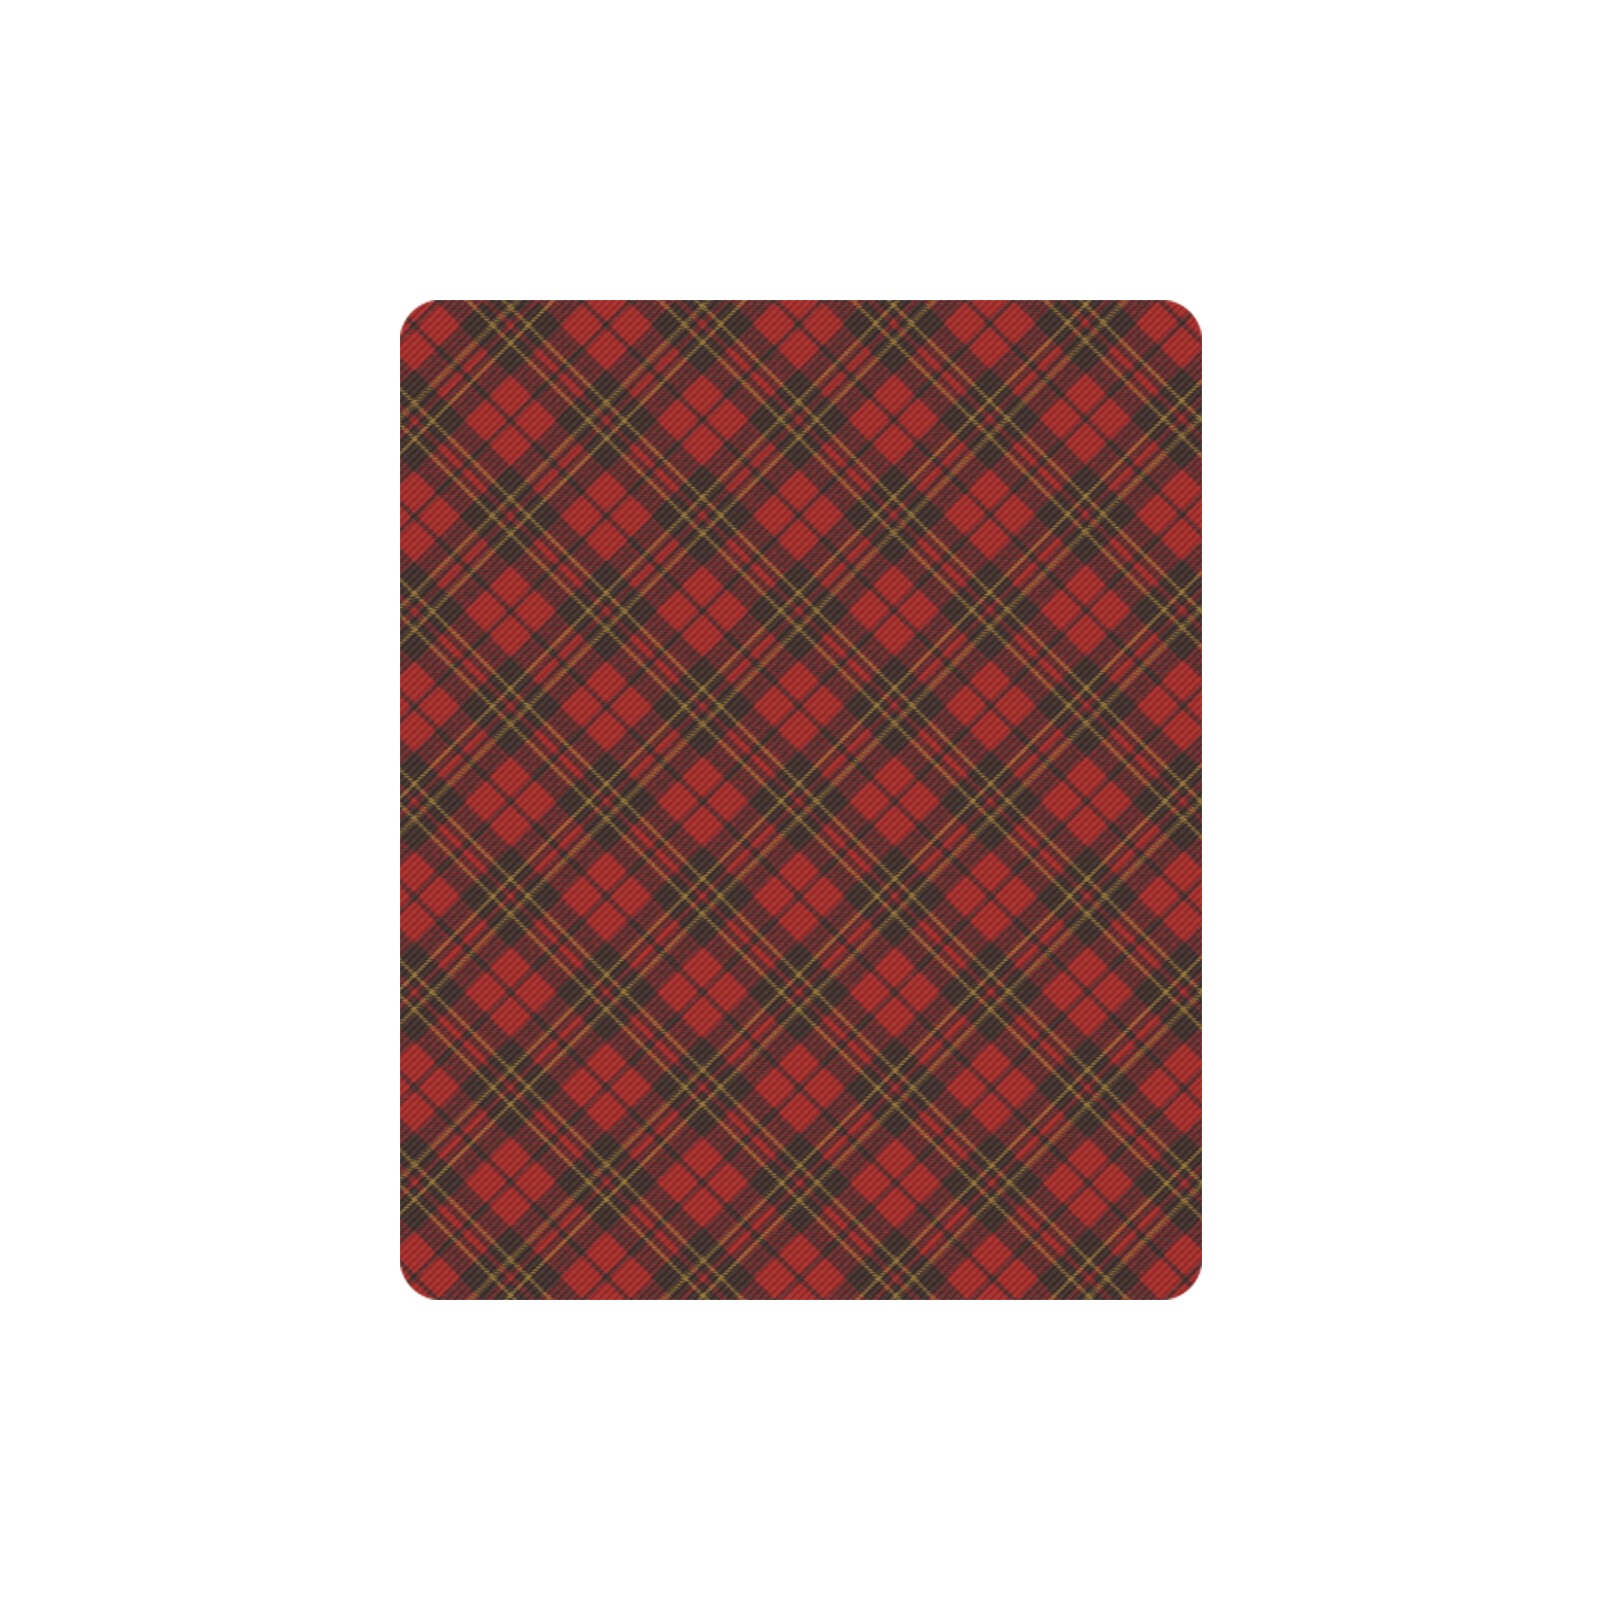 Red tartan plaid winter Christmas pattern holidays Rectangle Mousepad